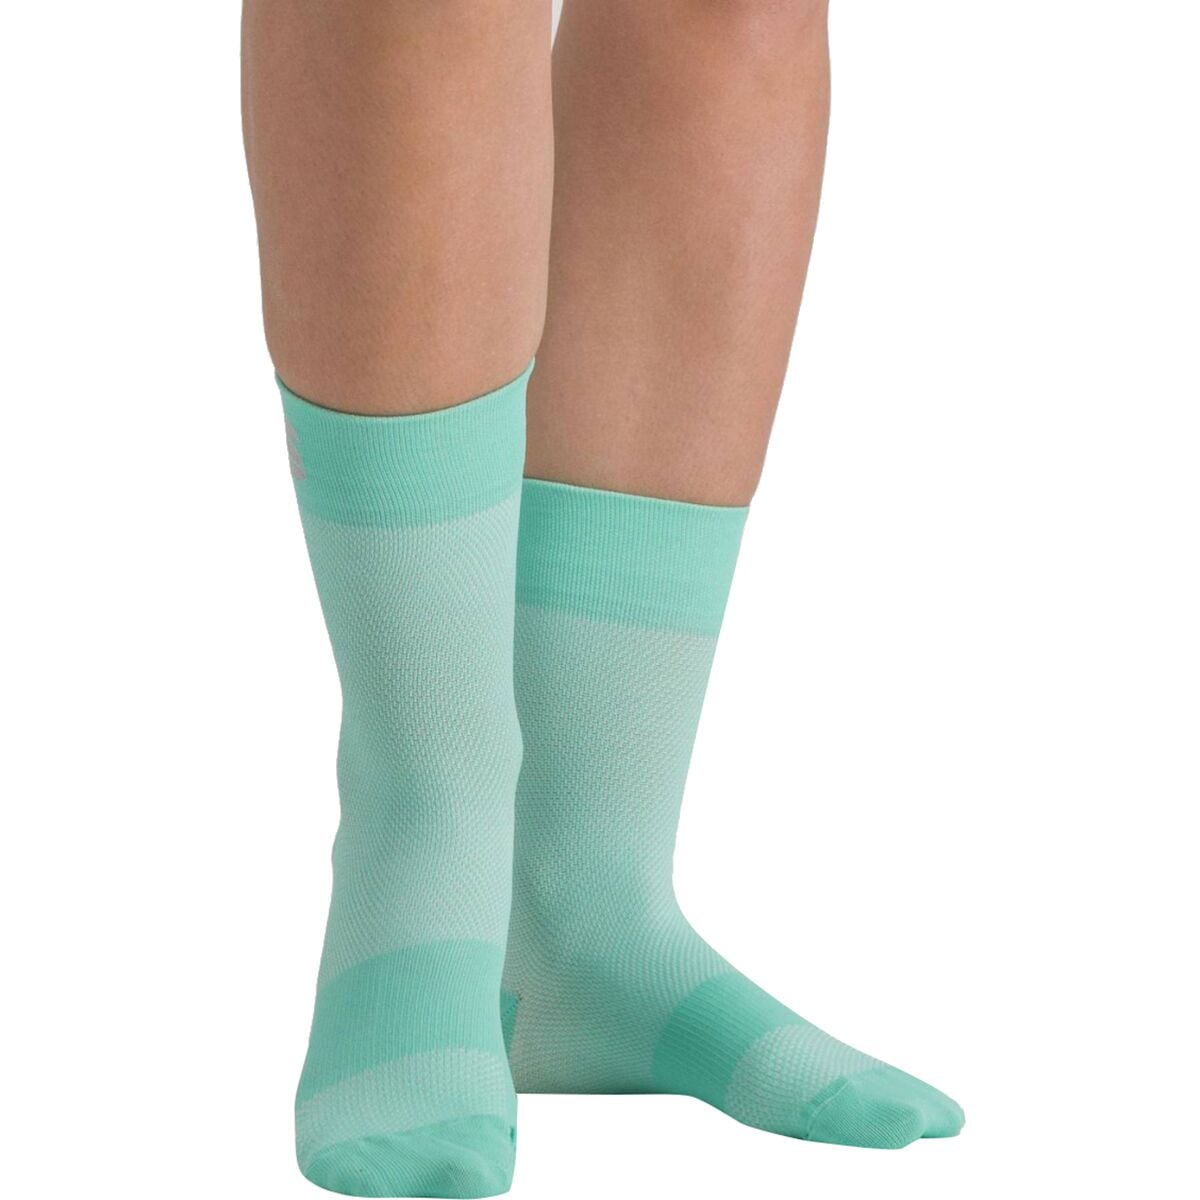 Sportful Matchy Sock - Women's Jade Cream, L/XL